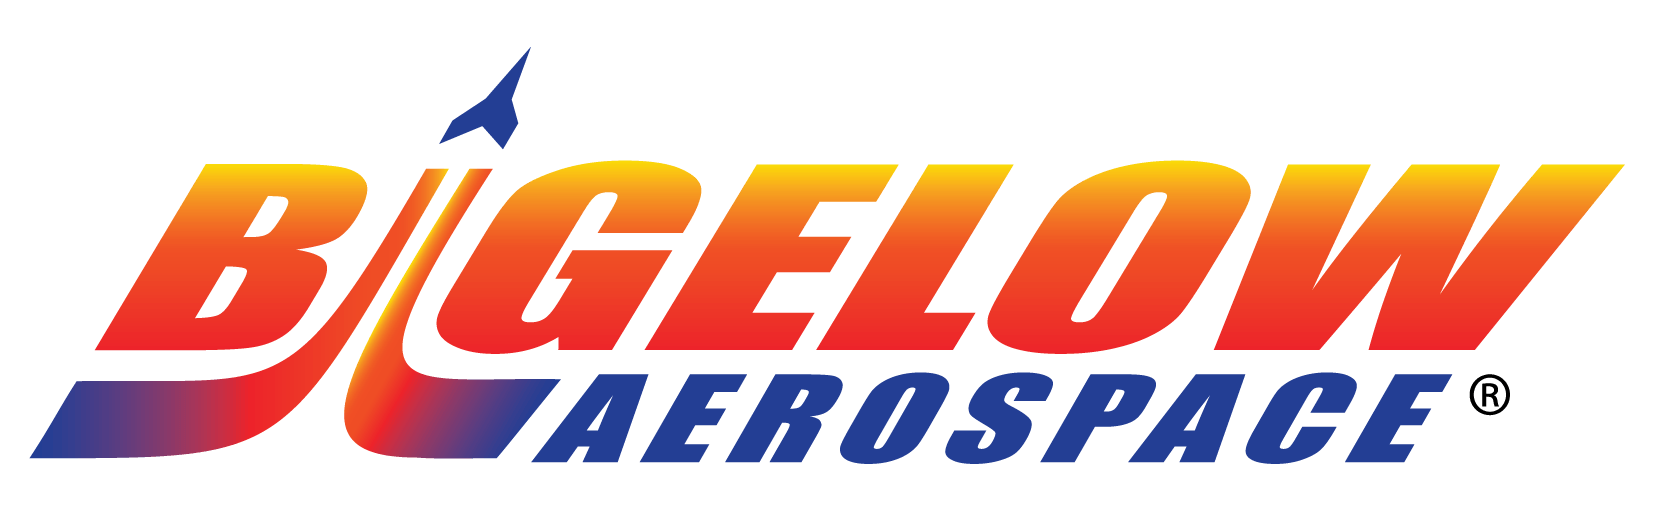 Bigelow Aerospace Logo - Bigelow Aerospace